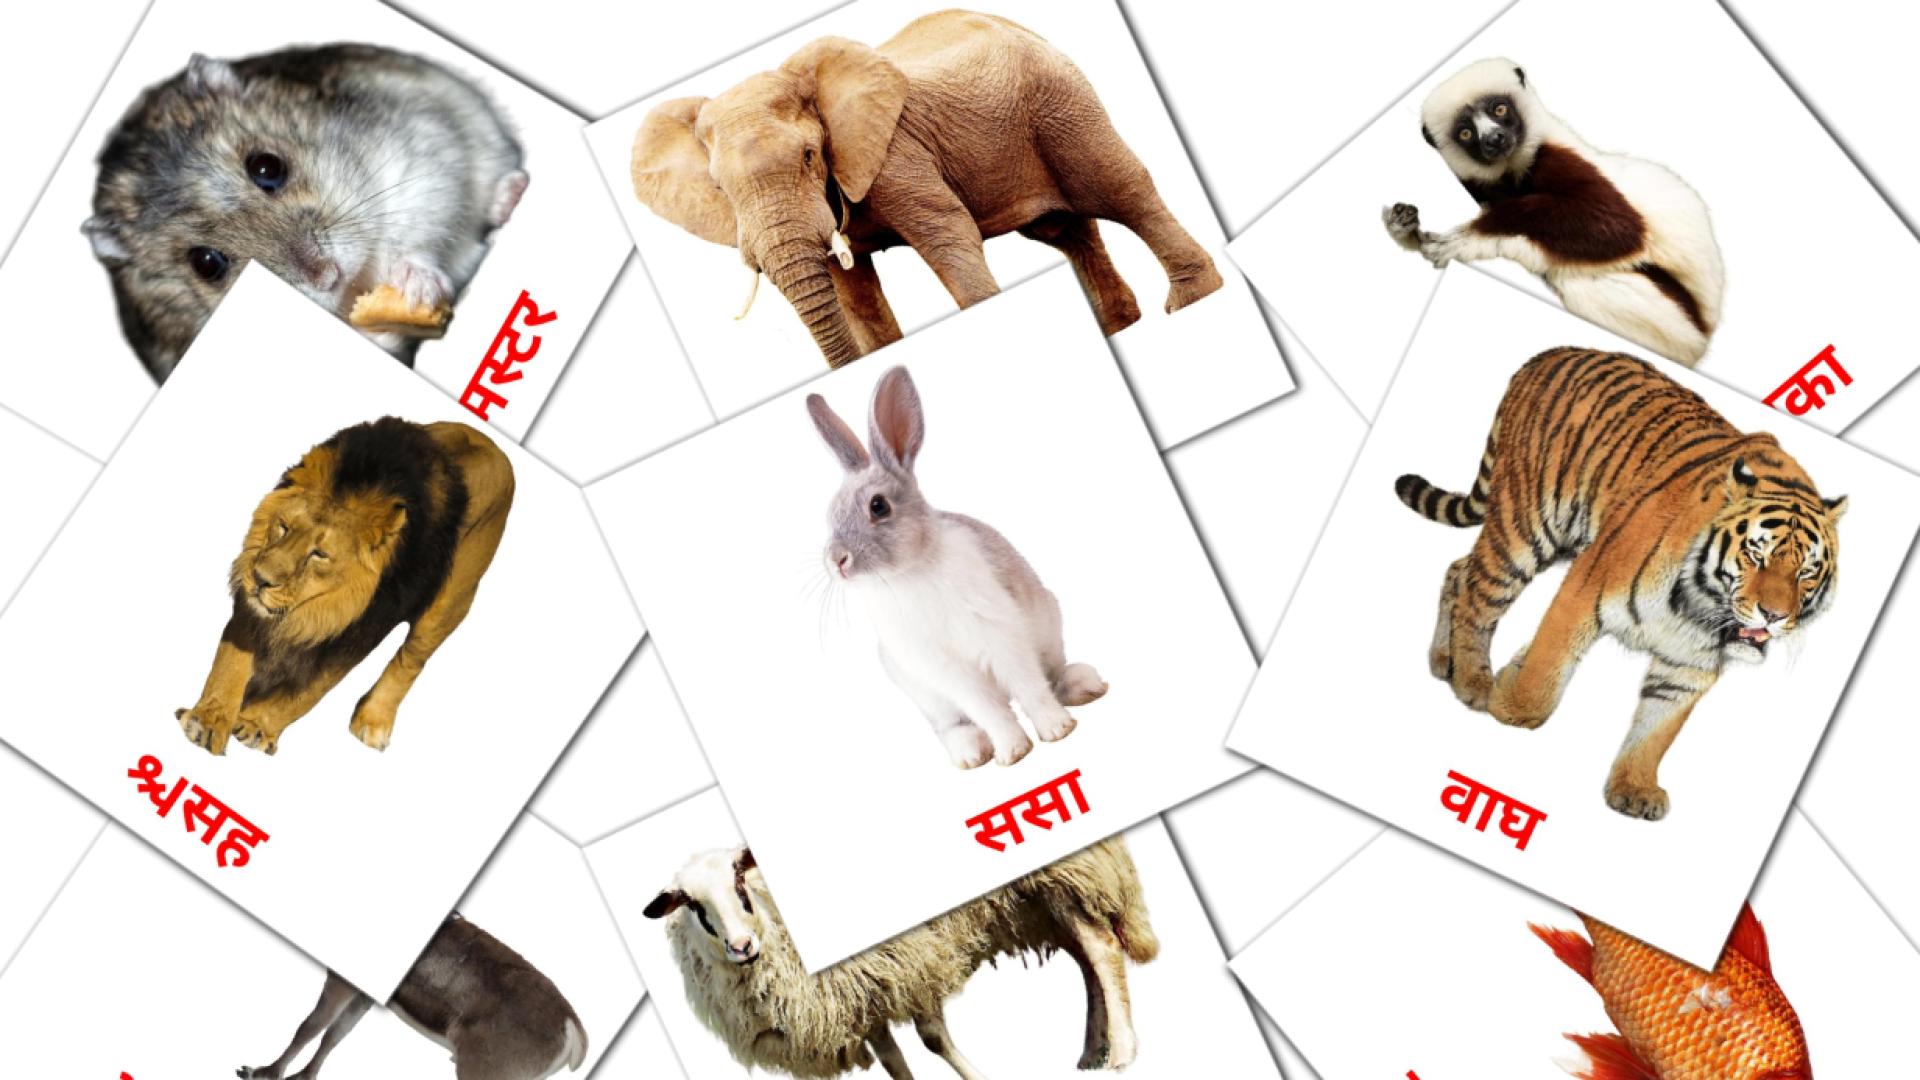 46 प्राणी flashcards